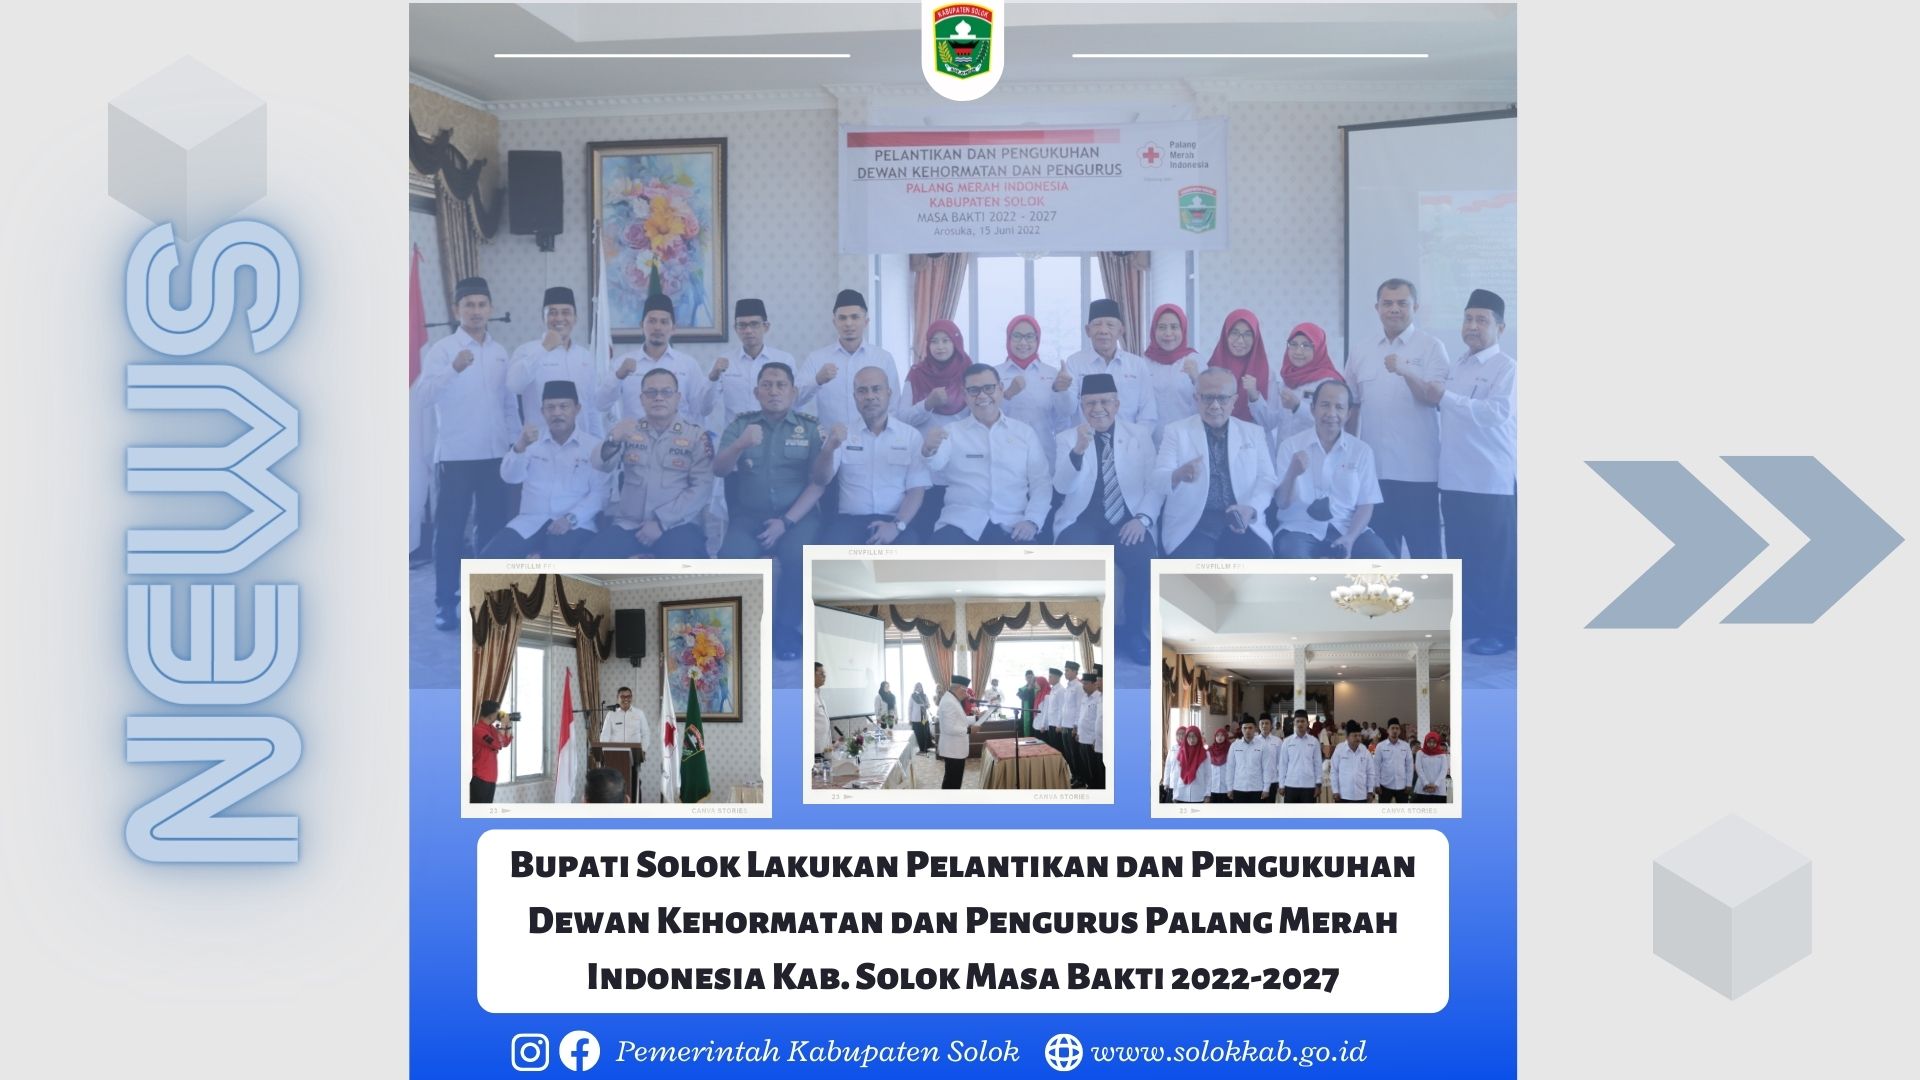 Bupati Solok Lakukan Pelantikan dan Pengukuhan Dewan Kehormatan dan Pengurus Palang Merah Indonesia Kab. Solok Masa Bakti 2022-2027